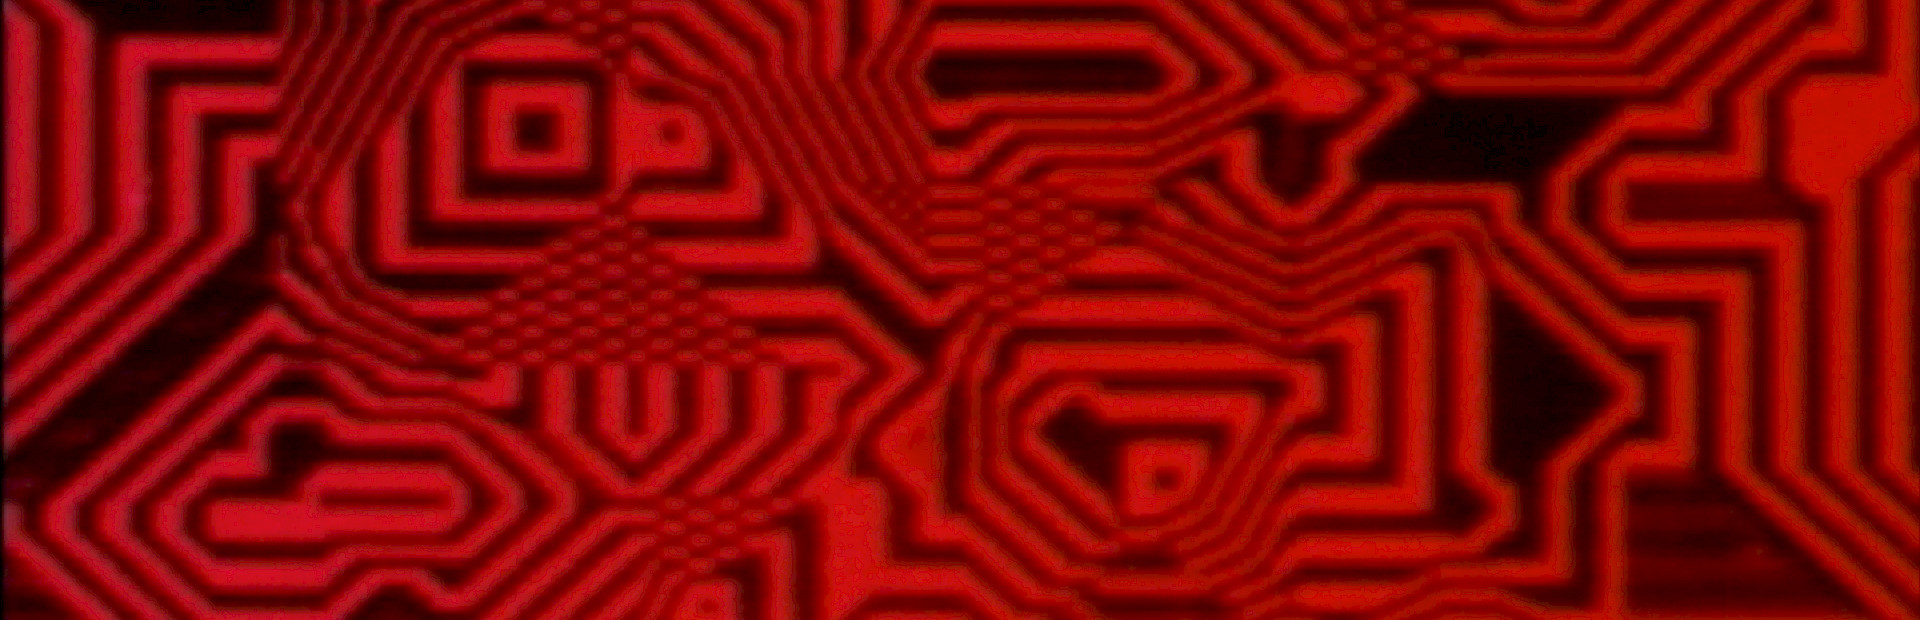 Still from 'Pixillation' by Lillian Schwartz depicting interlocking geometric patterns in red and black.